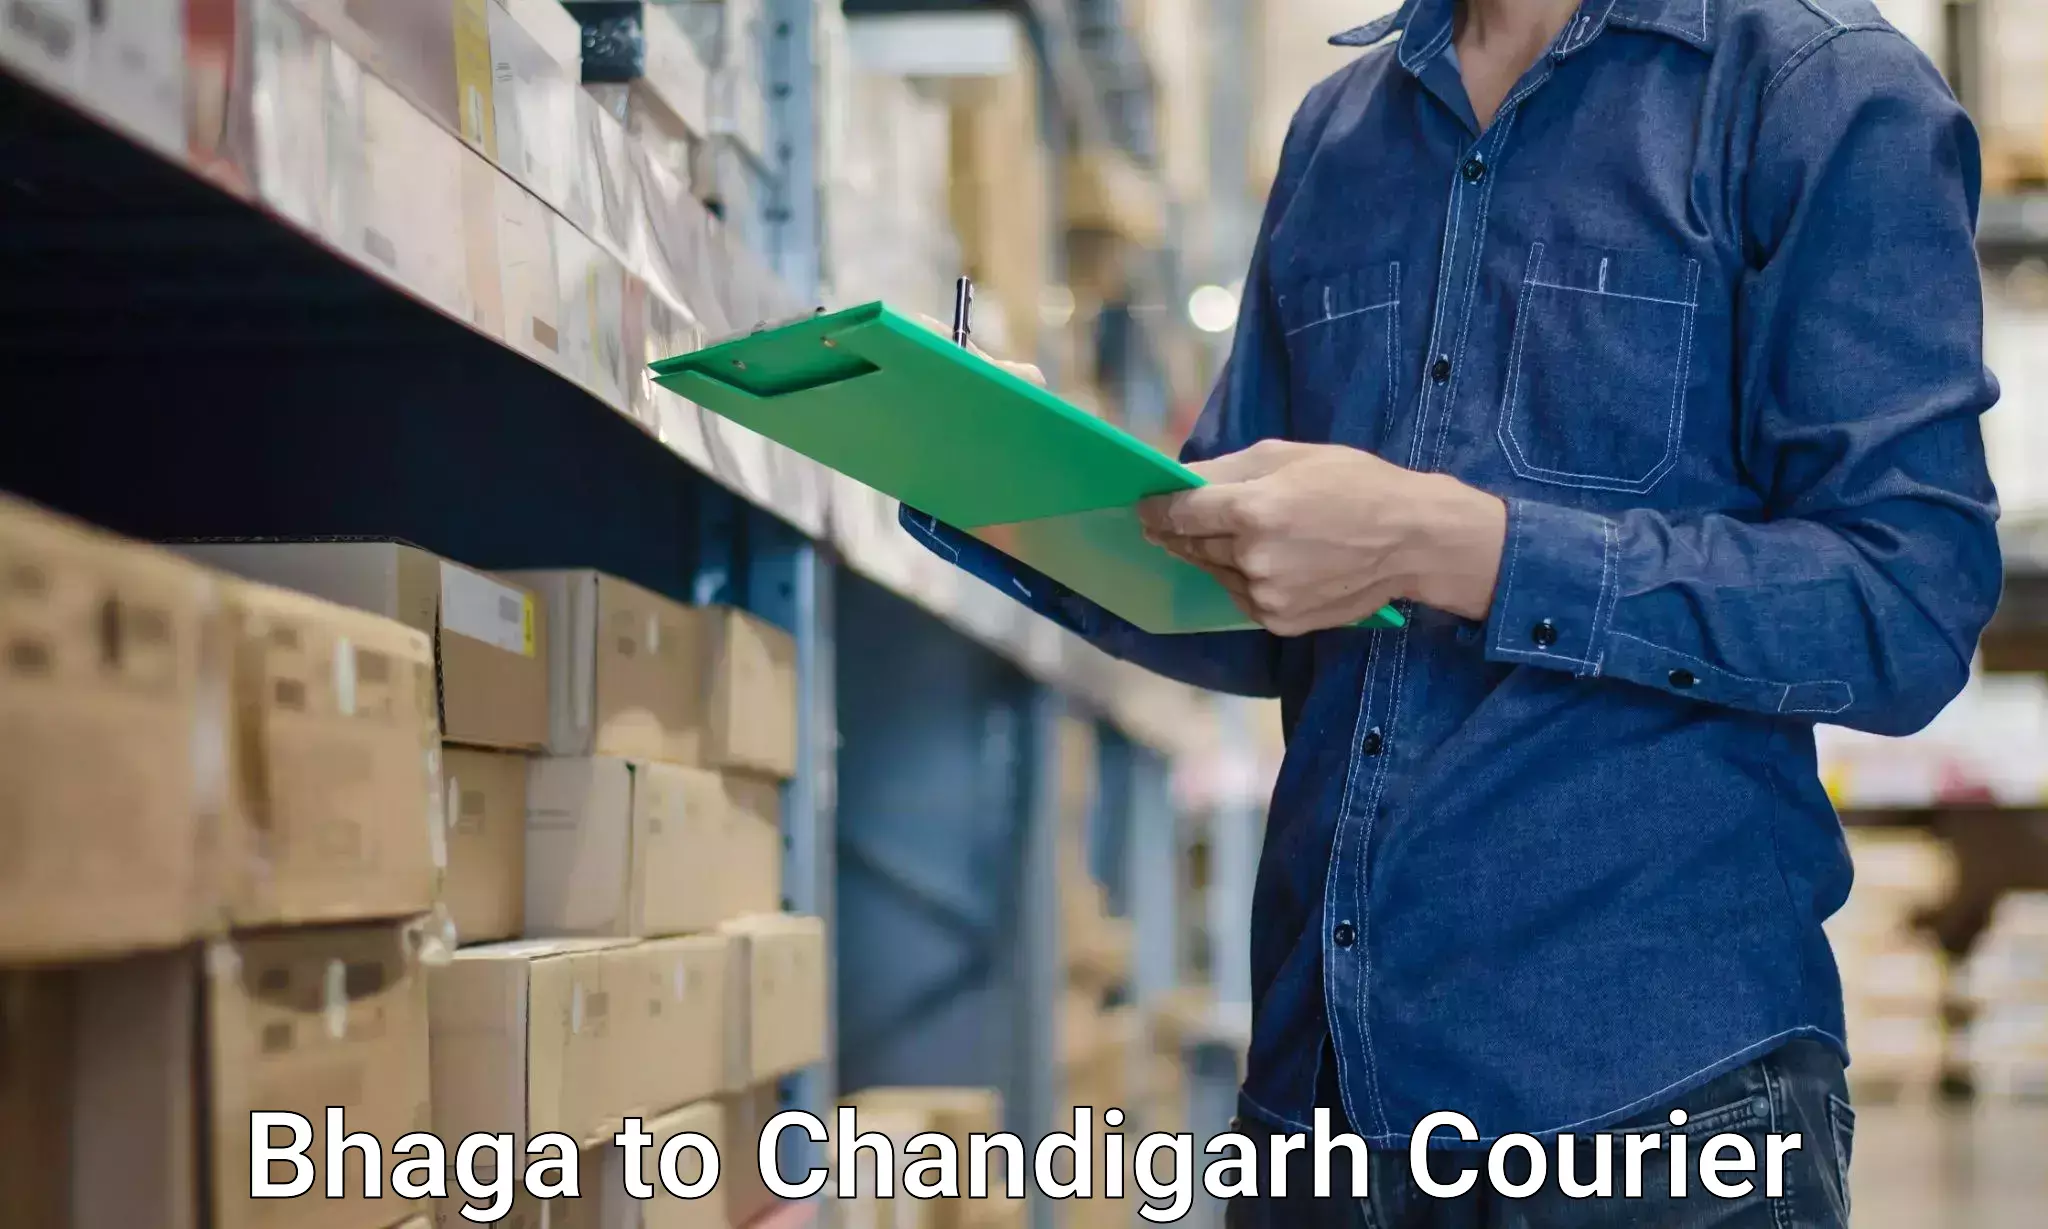 Professional moving company Bhaga to Chandigarh